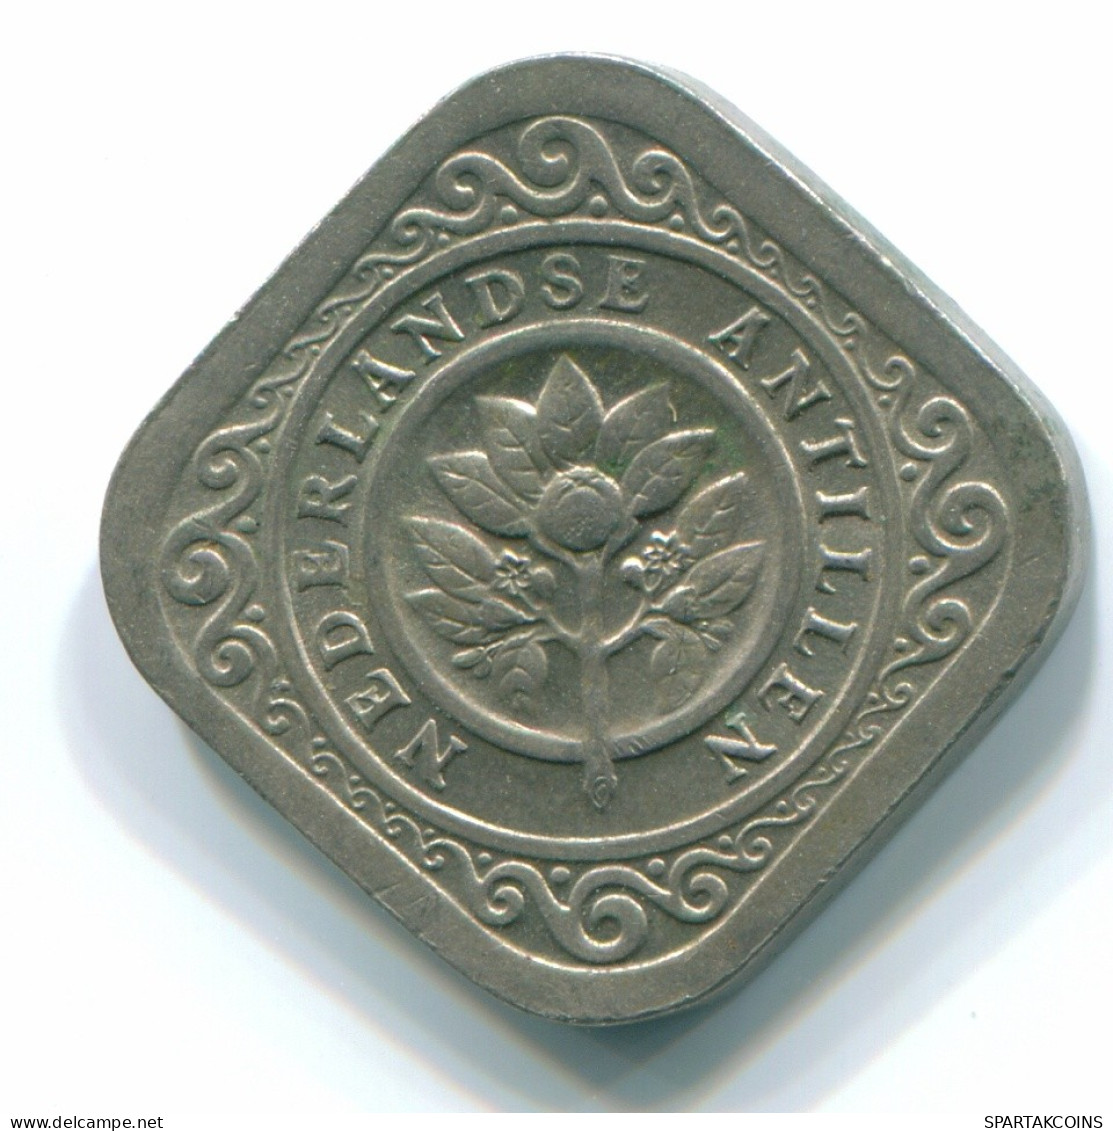 5 CENTS 1970 NETHERLANDS ANTILLES Nickel Colonial Coin #S12512.U.A - Nederlandse Antillen